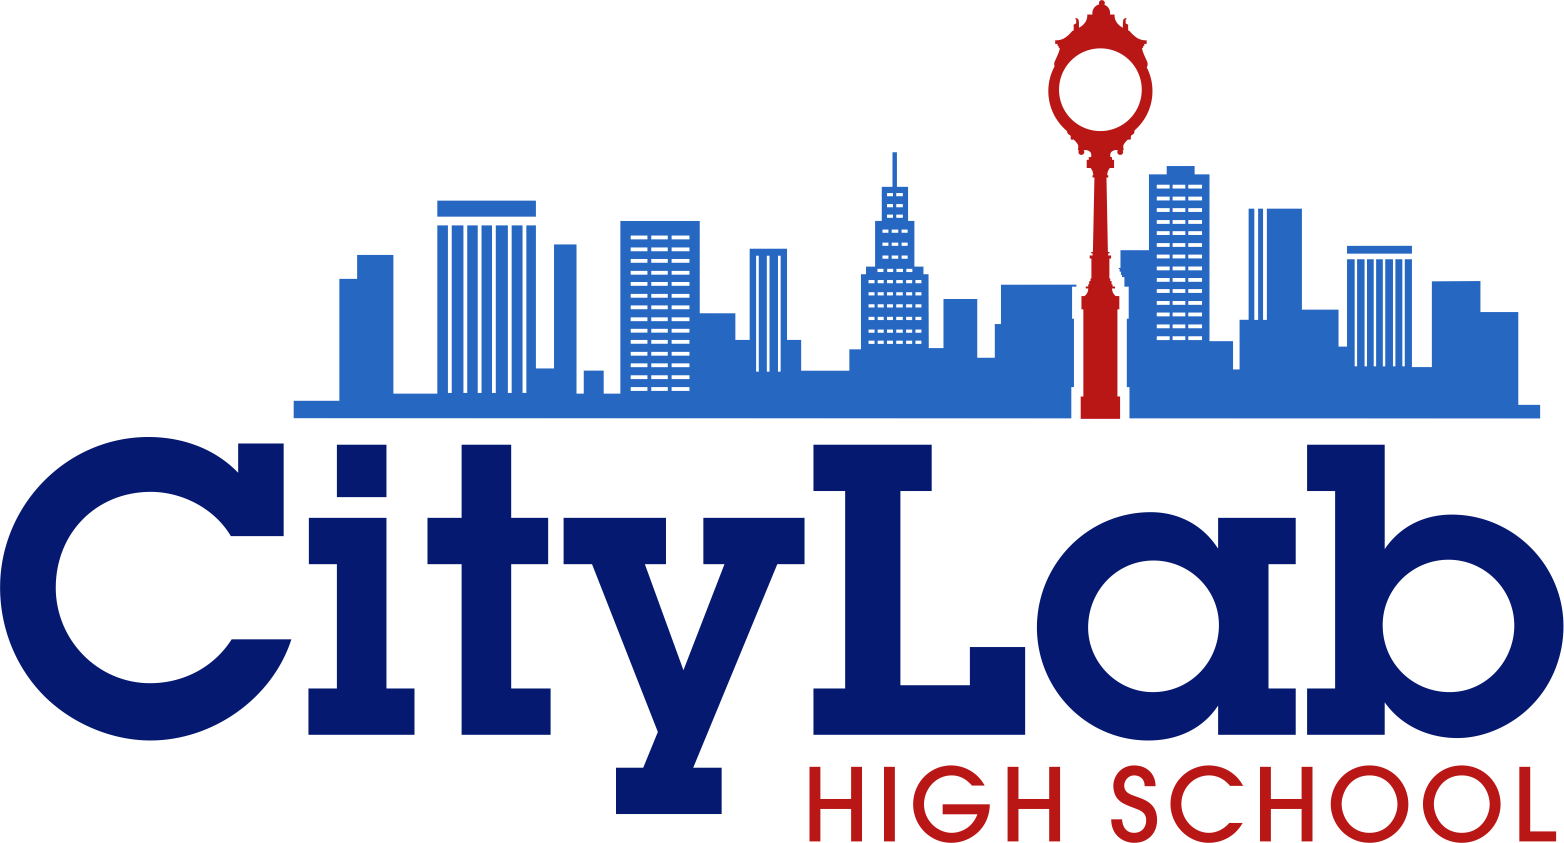 CityLab High School